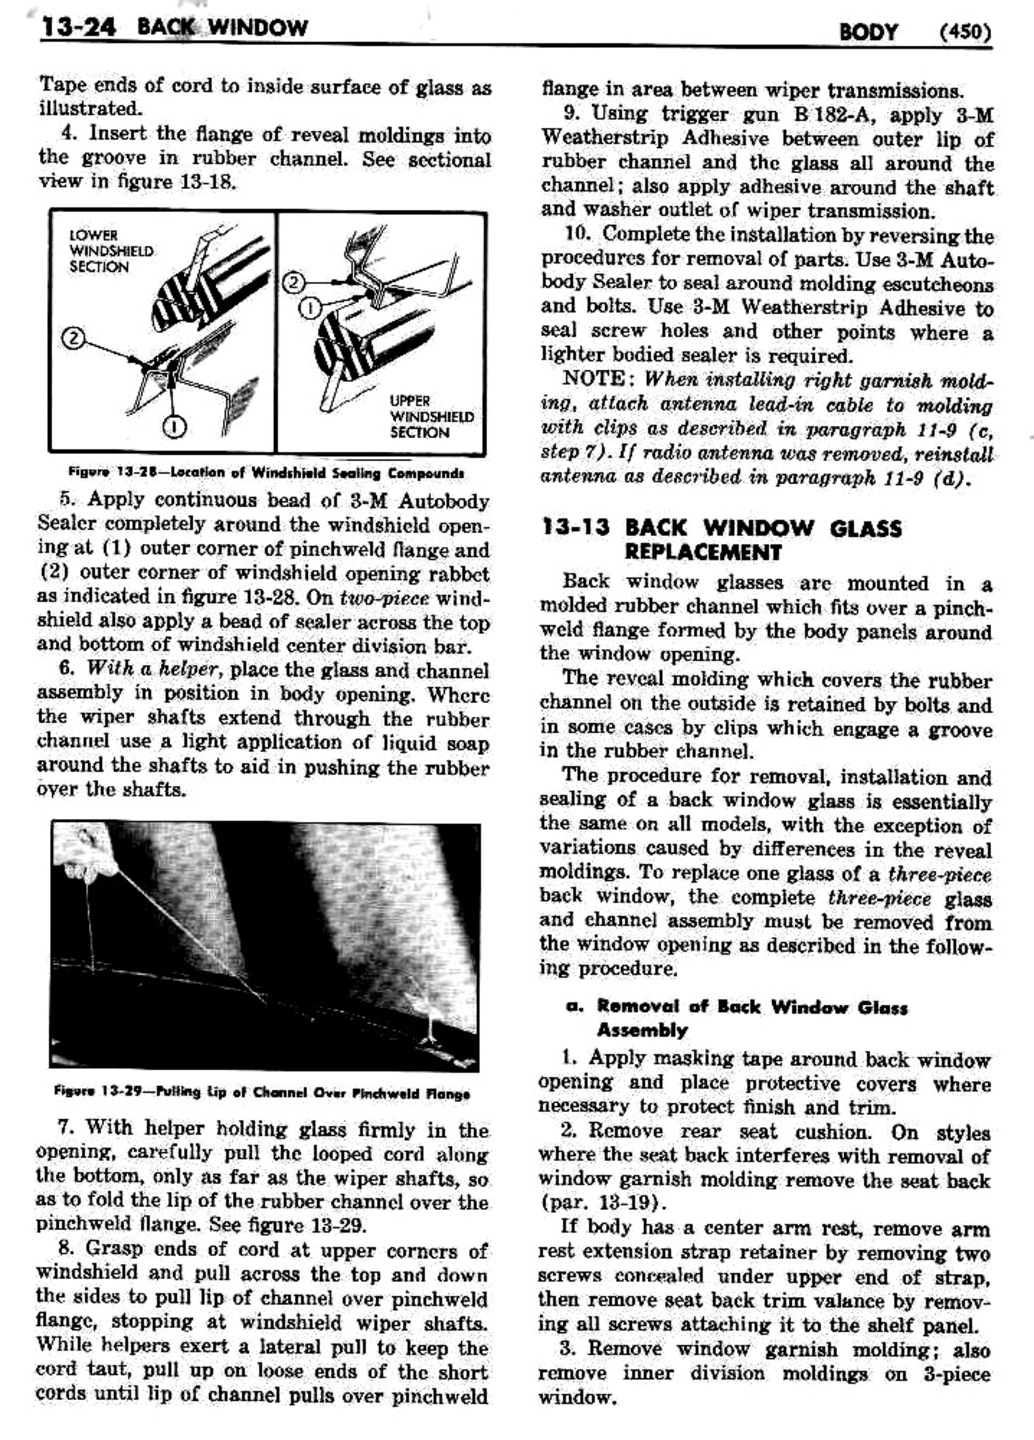 n_14 1951 Buick Shop Manual - Body-024-024.jpg